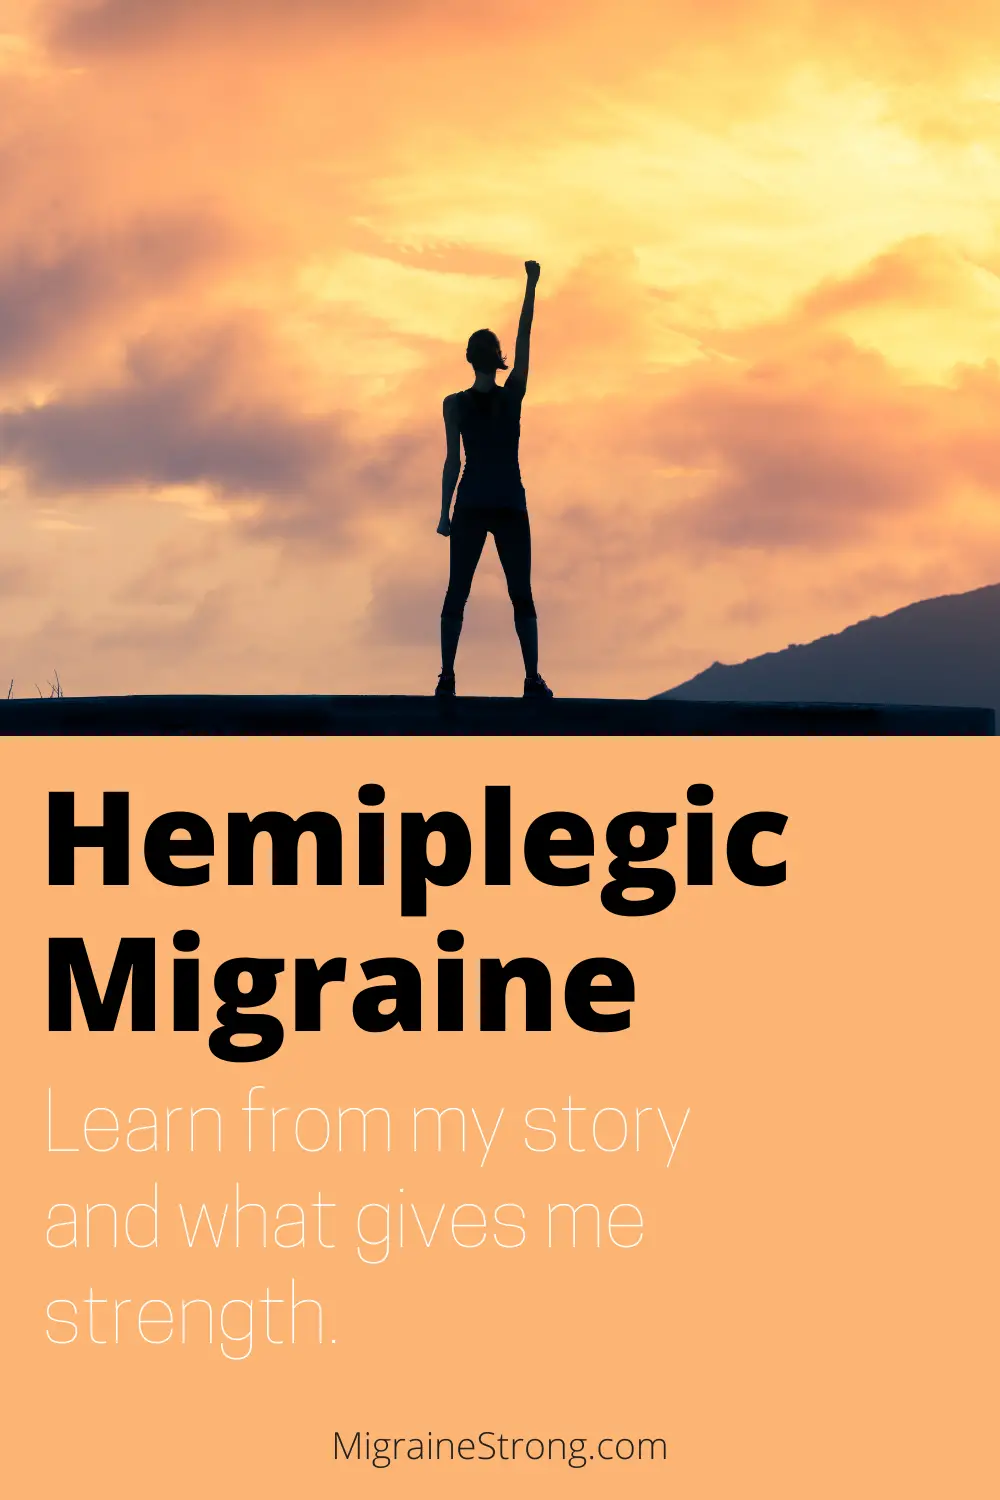 My Hemiplegic Migraine Strong Story - Jennifer Senne